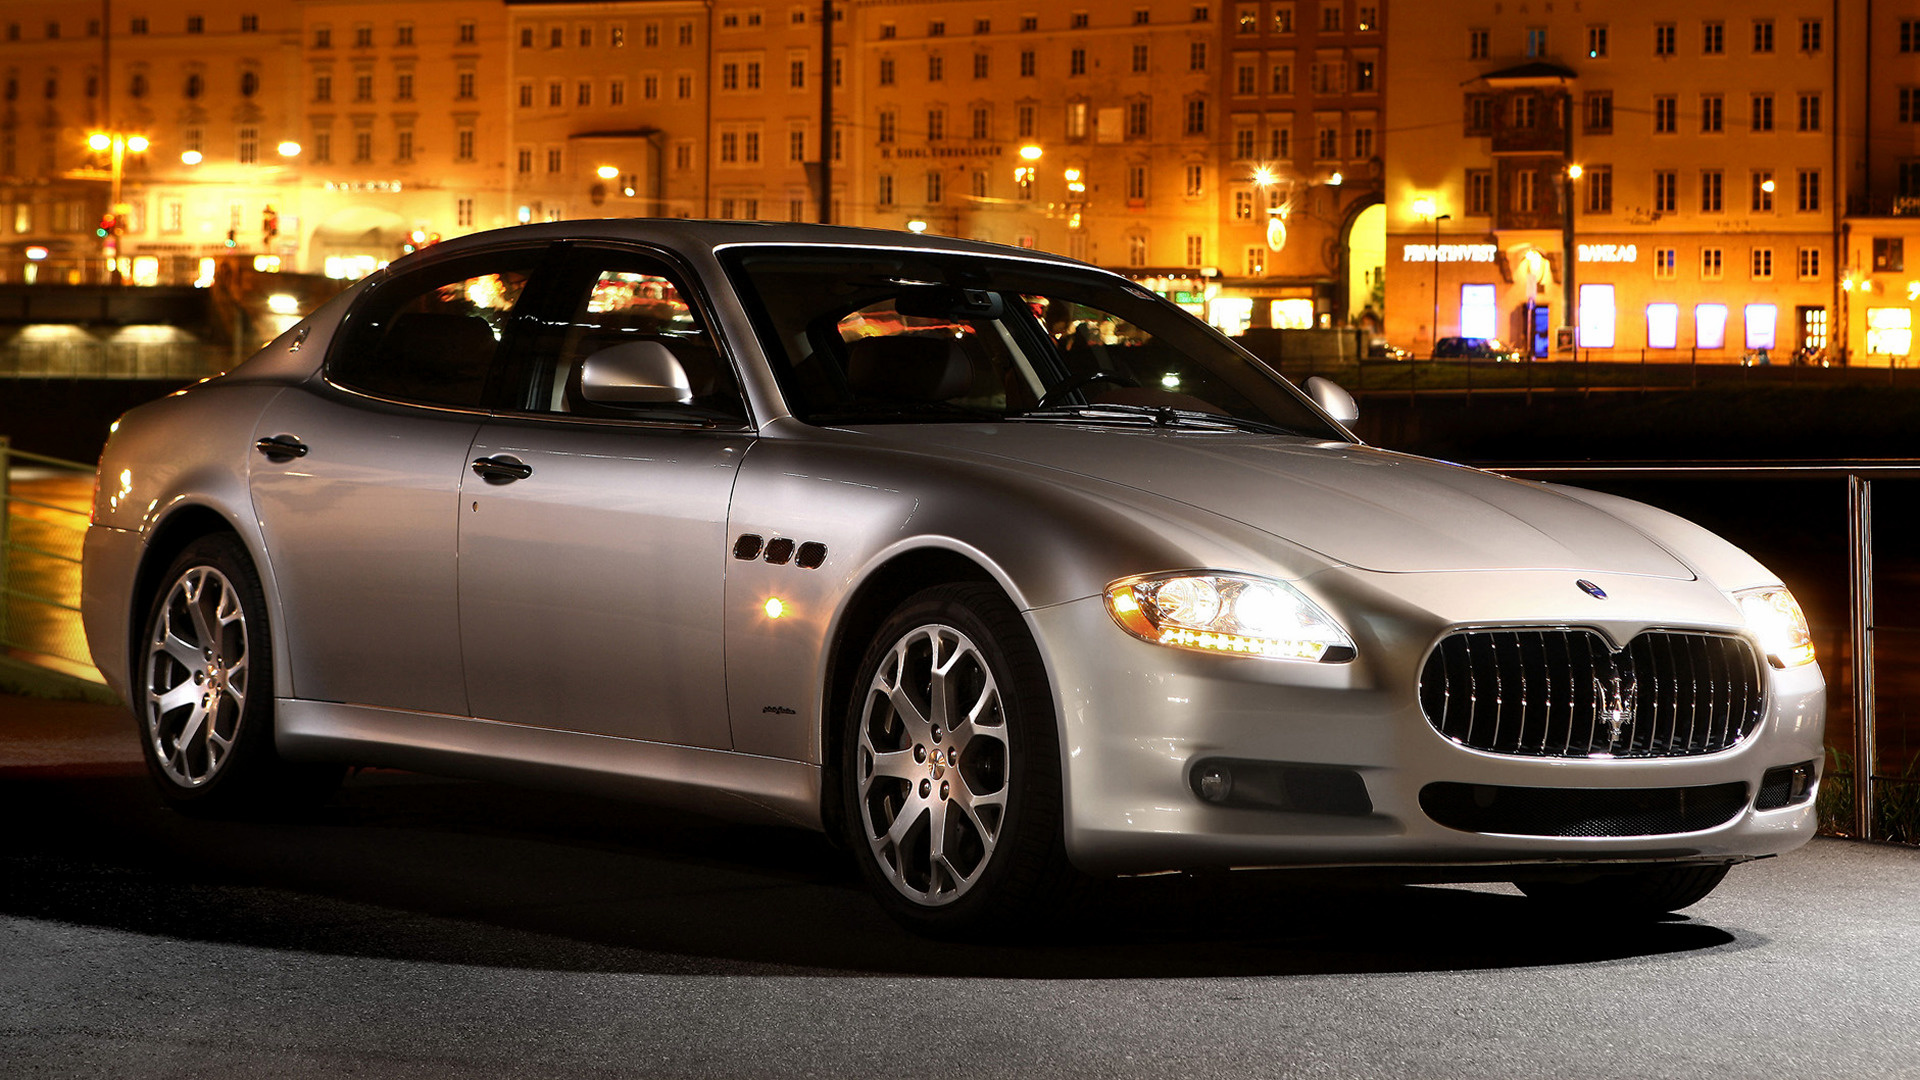 Descarga gratuita de fondo de pantalla para móvil de Maserati, Coche, Maserati Quattroporte, Vehículos, Coche De Plata, Coche De Tamaño Completo, Sedán Deportivo.